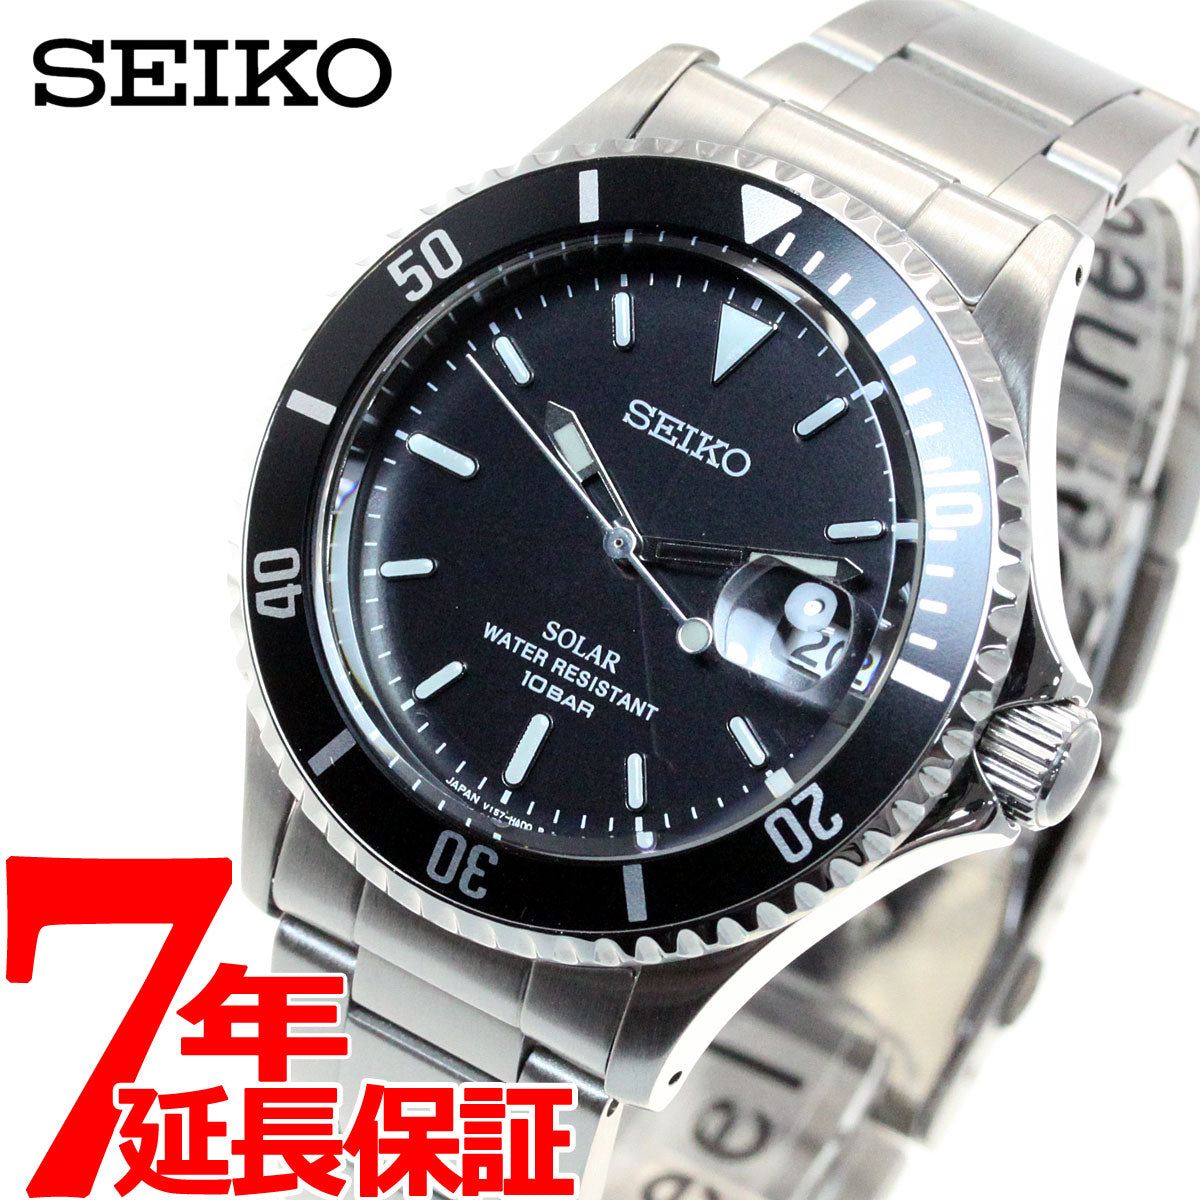 SEIKO SOLAR ショップ限定モデル  腕時計  SZEV011付属品は写真が全てです